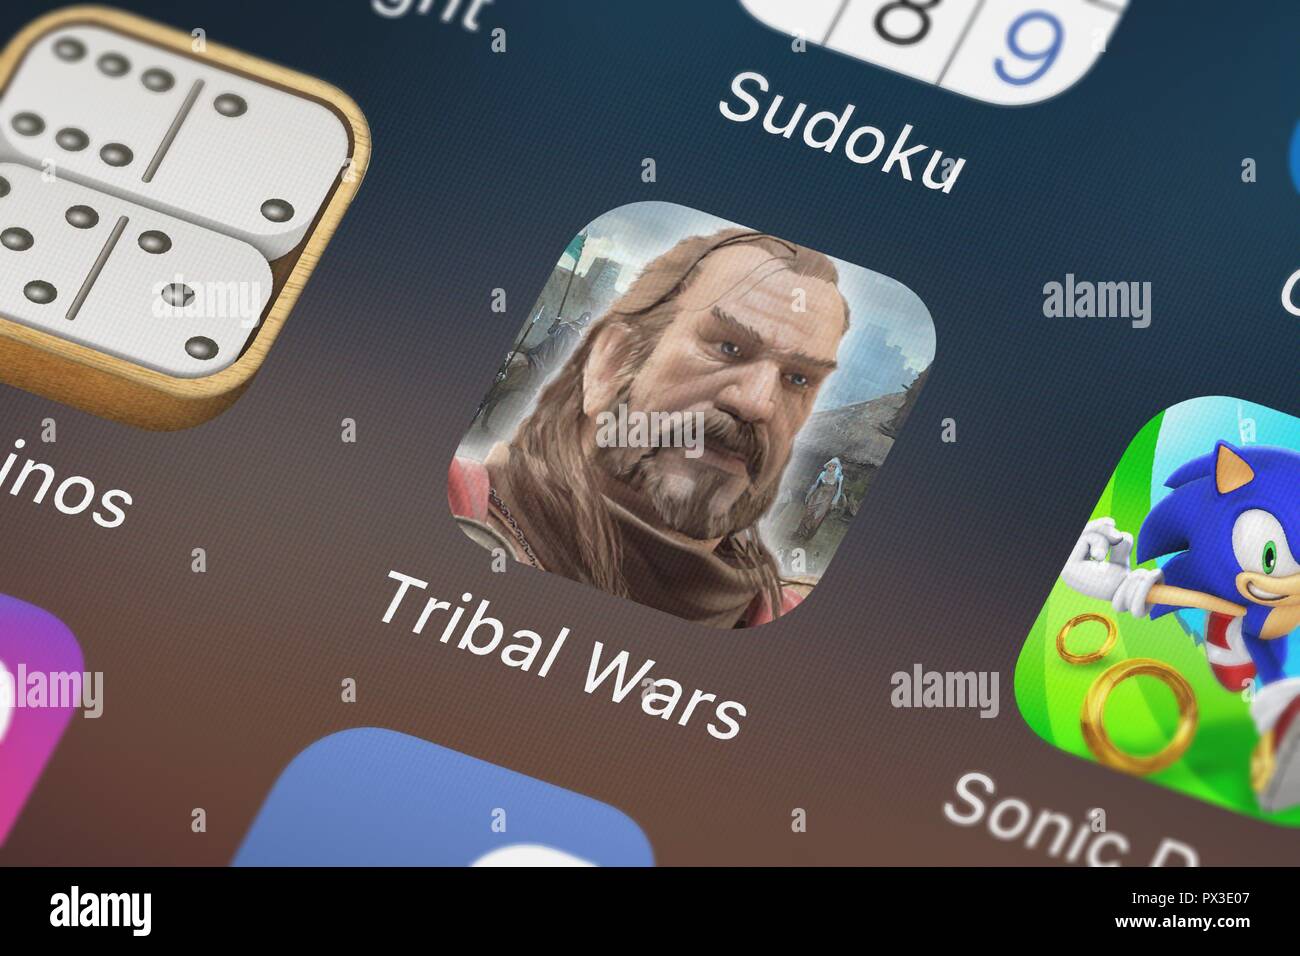 Tribal Wars 2 by InnoGames